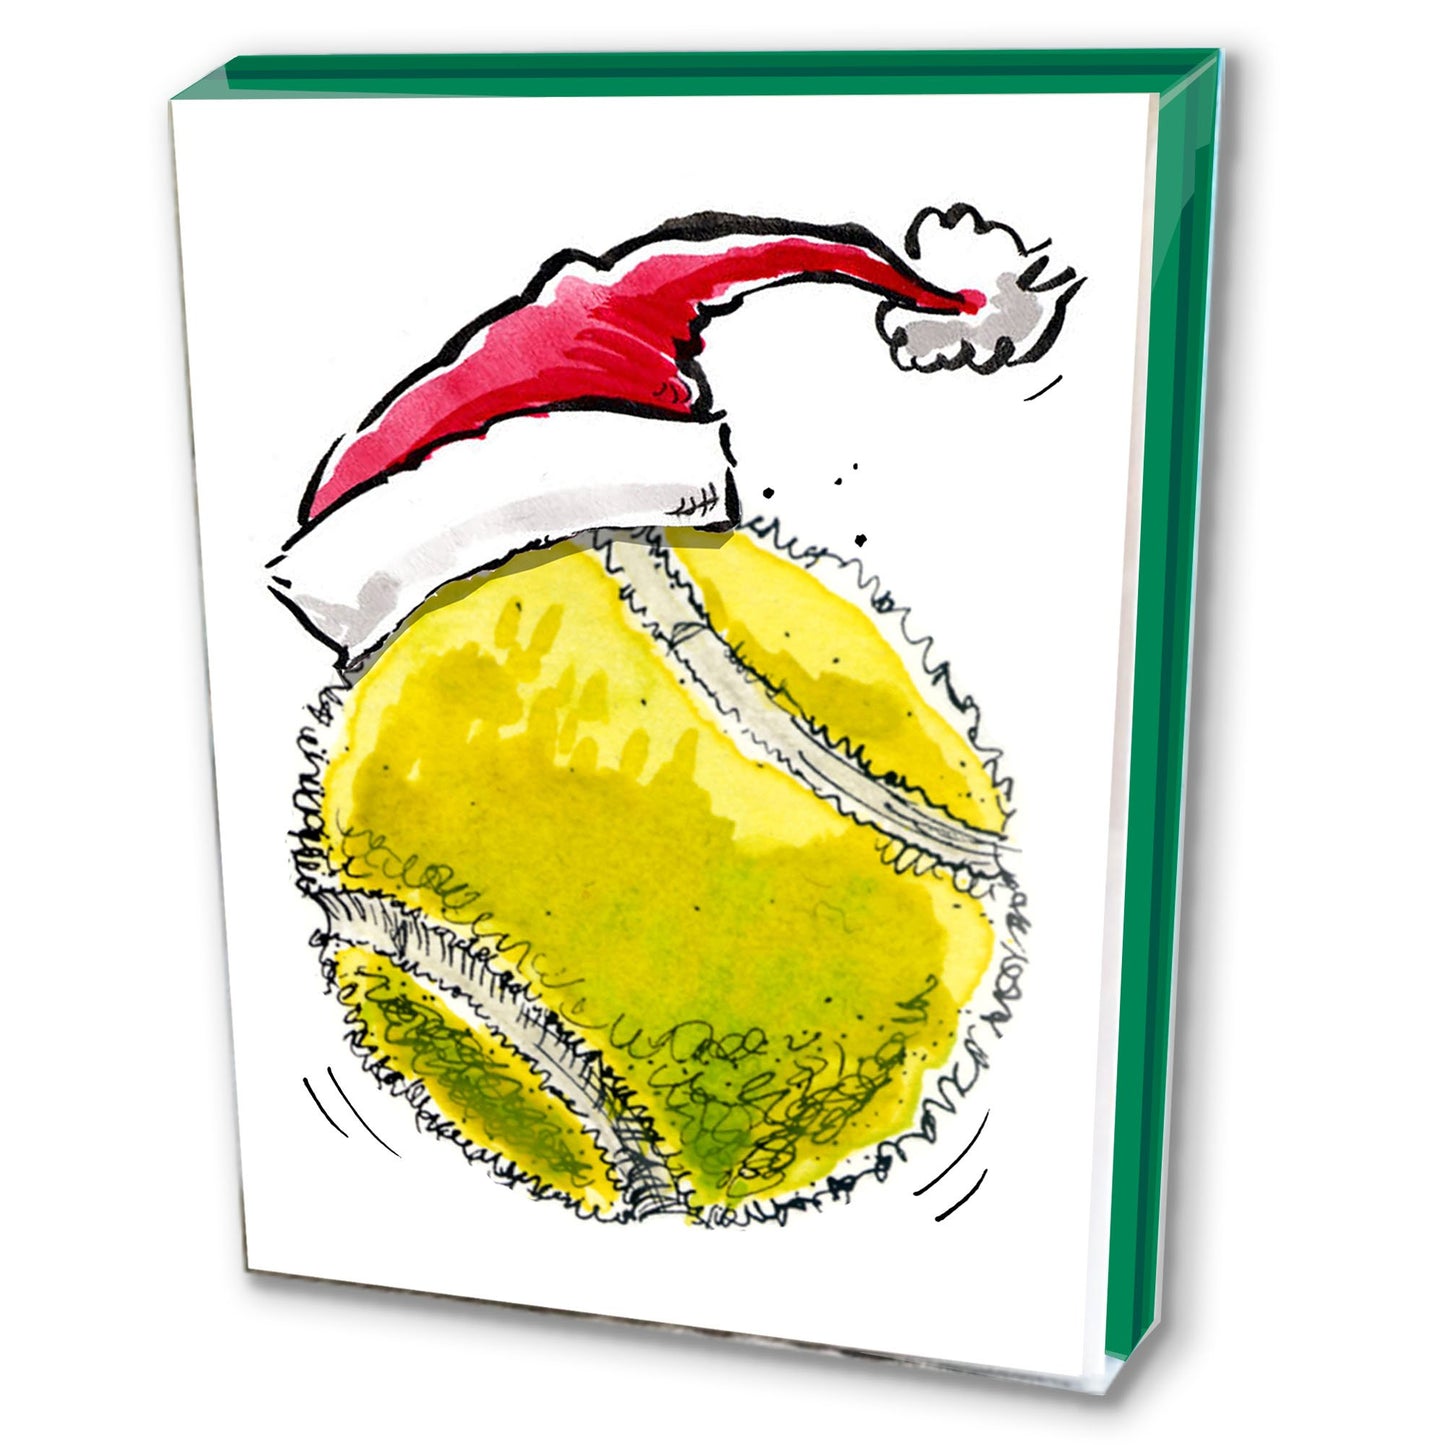 Santa Sports "Jingle Ballin'" Tennis Christmas Notecards and Envelopes 12-Pack